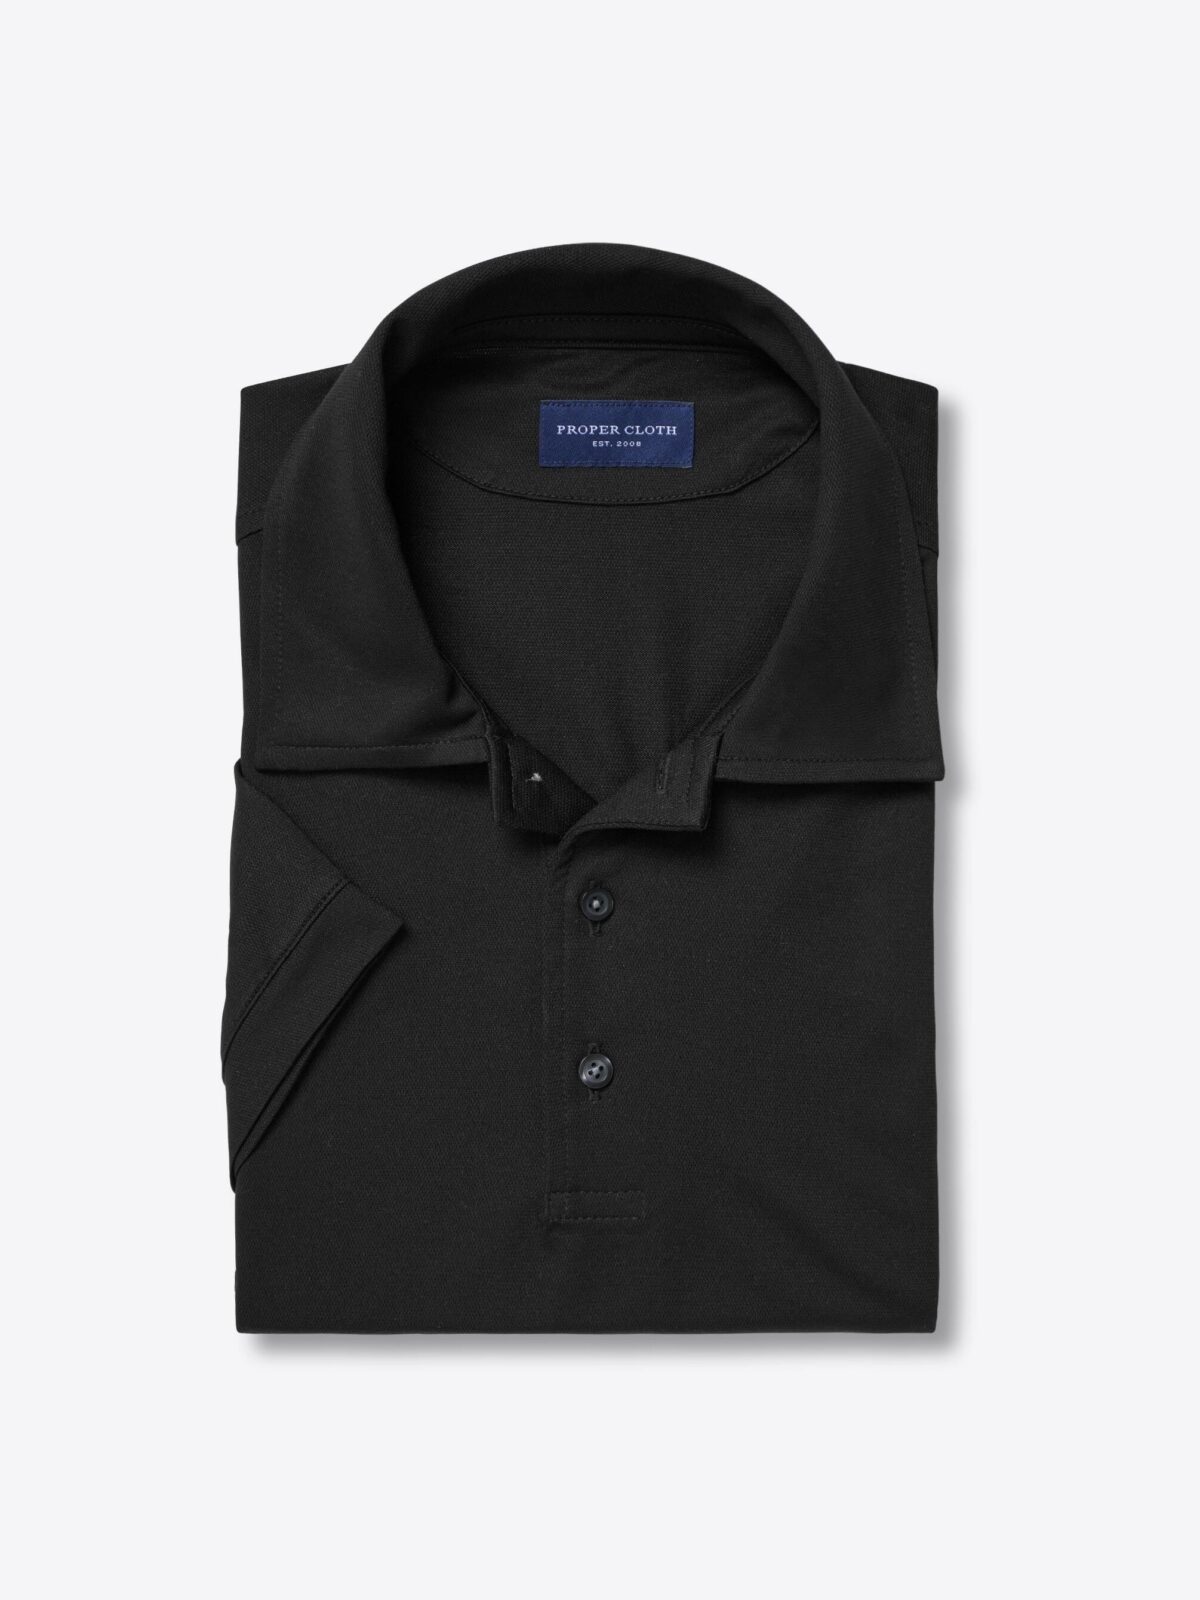 Black Coolmax Performance Knit Short Sleeve ShirtShirt by Proper Cloth